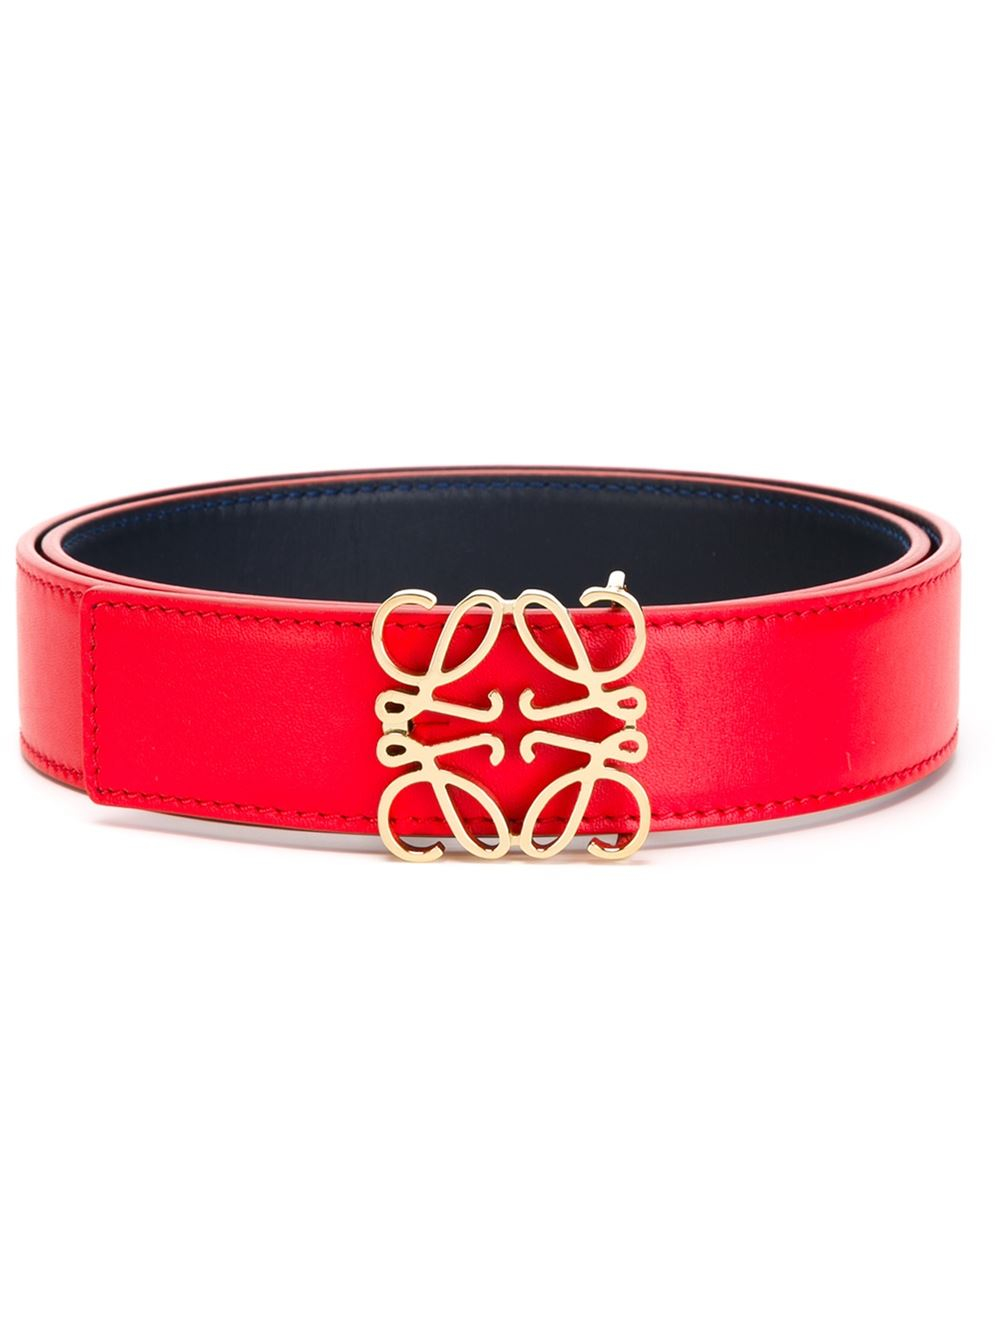 Lyst - Loewe Logo Buckle Belt in Red for Men